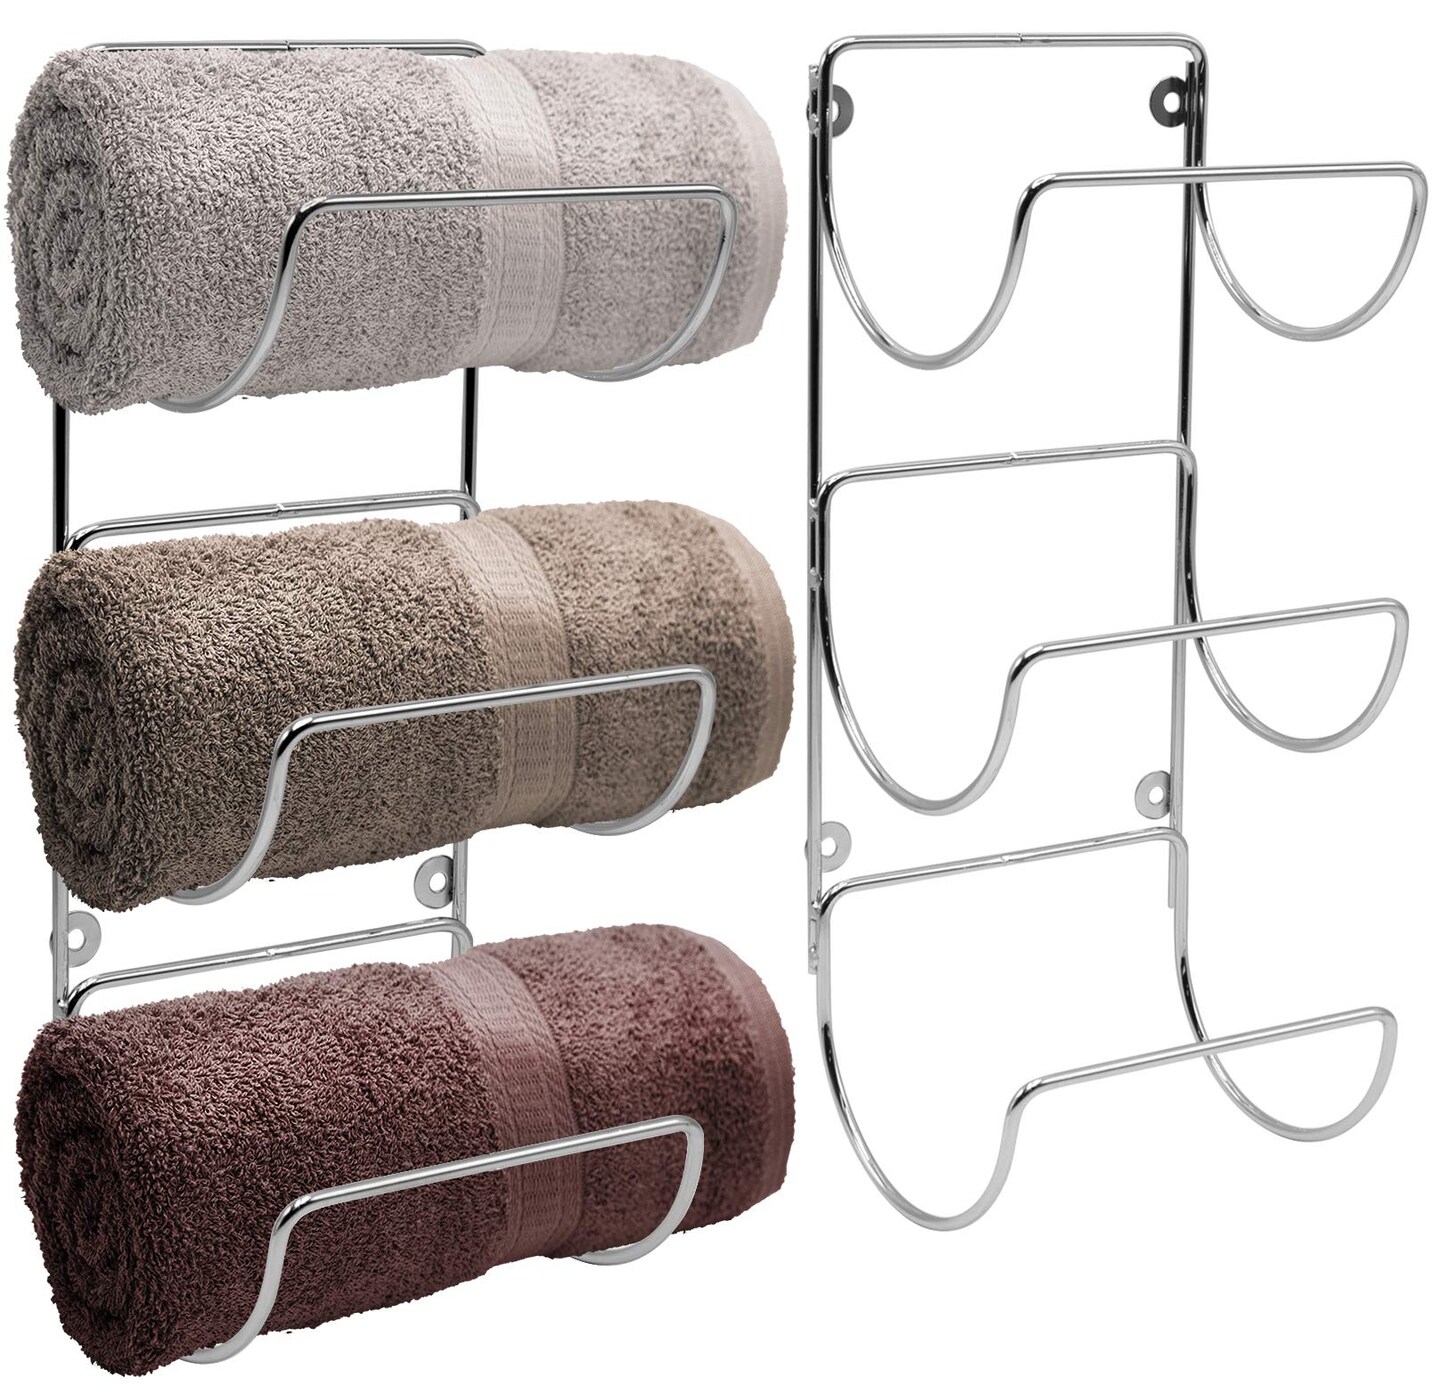 Sorbus Metal Wall Mounted Bathroom Towel Rack - Organizer for Towels, Washcloths, Hand Towels, Linens, Ideal for Bathroom, Spa, Salon